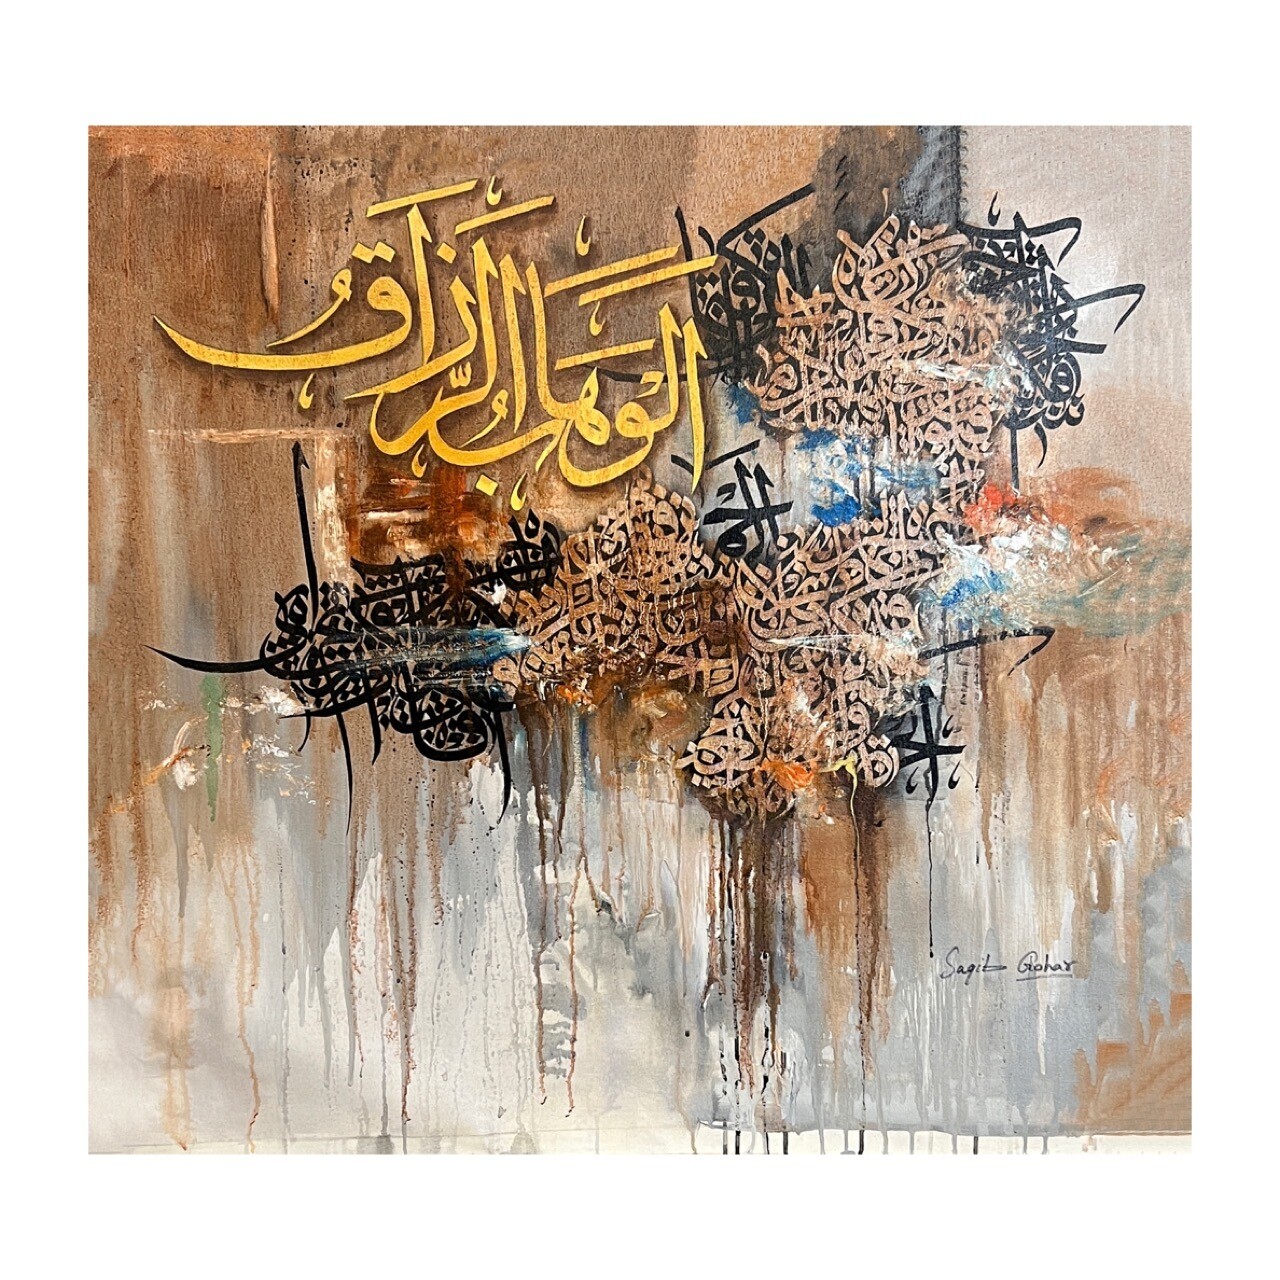 Al-Wahhab Ar-Razzaq  - Names of Allah - abstract calligraphy oil painting